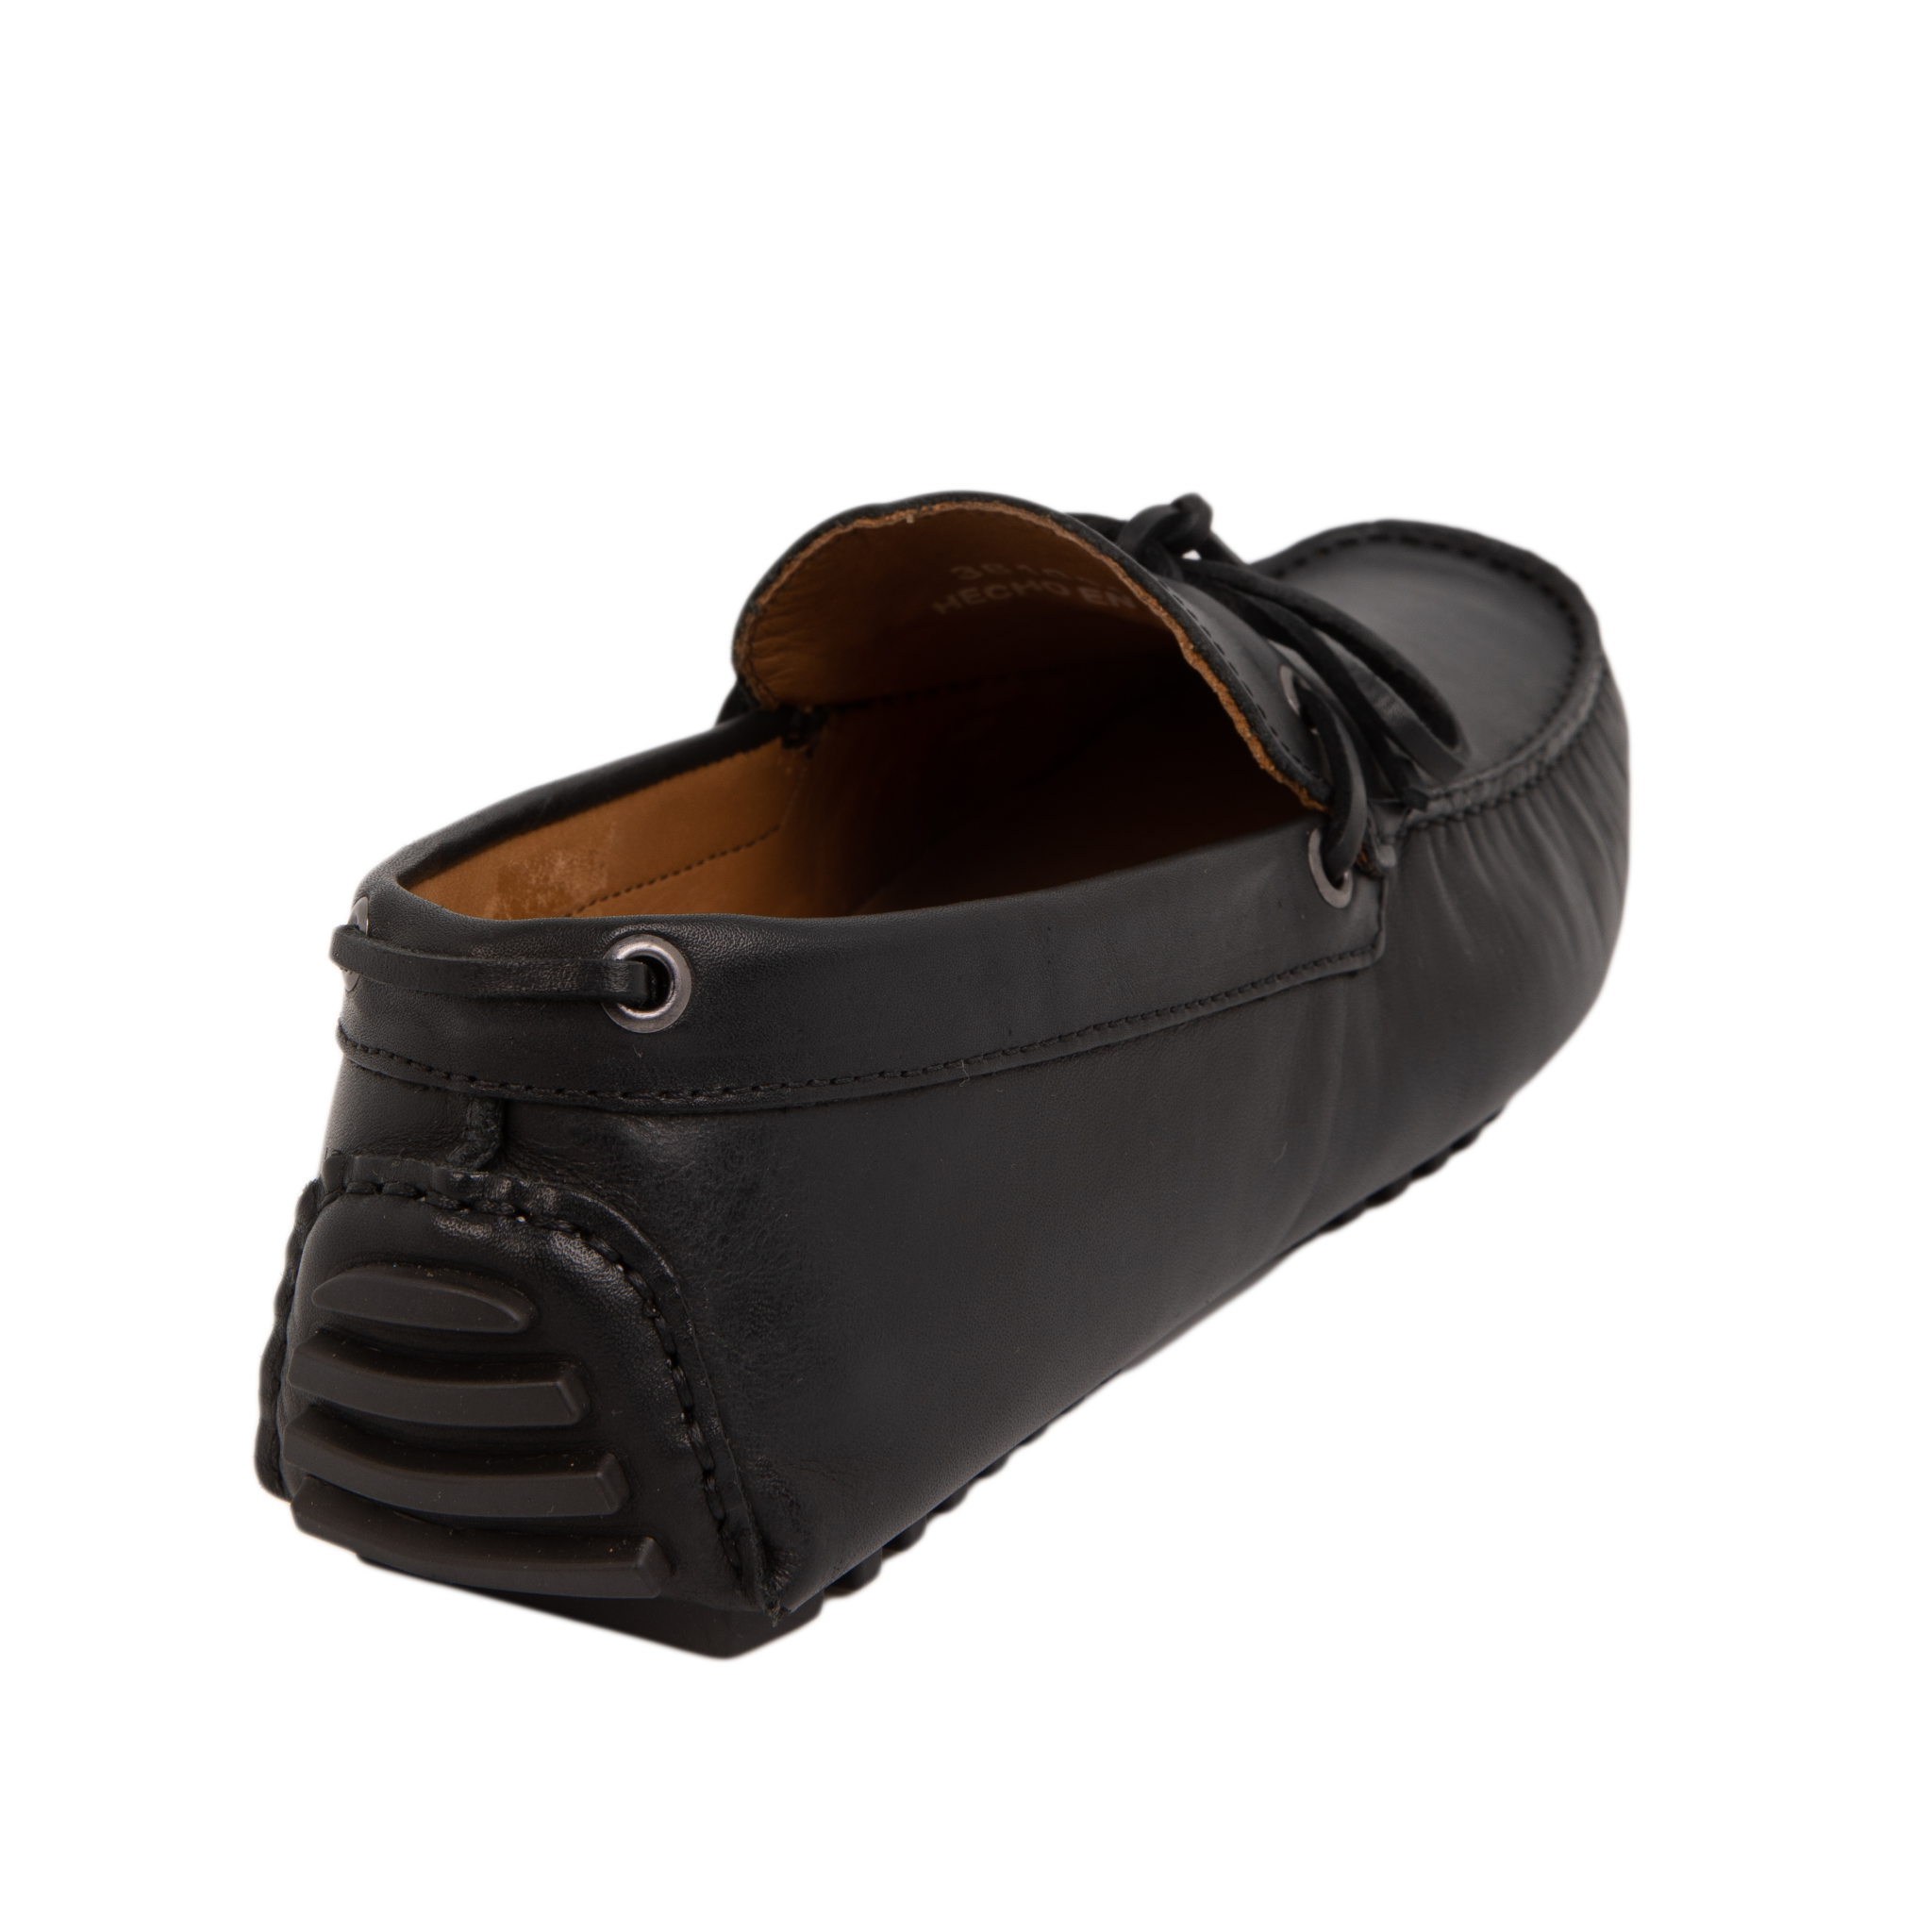 Charlie Boat Shoes - Black Moccasin TARBAY   